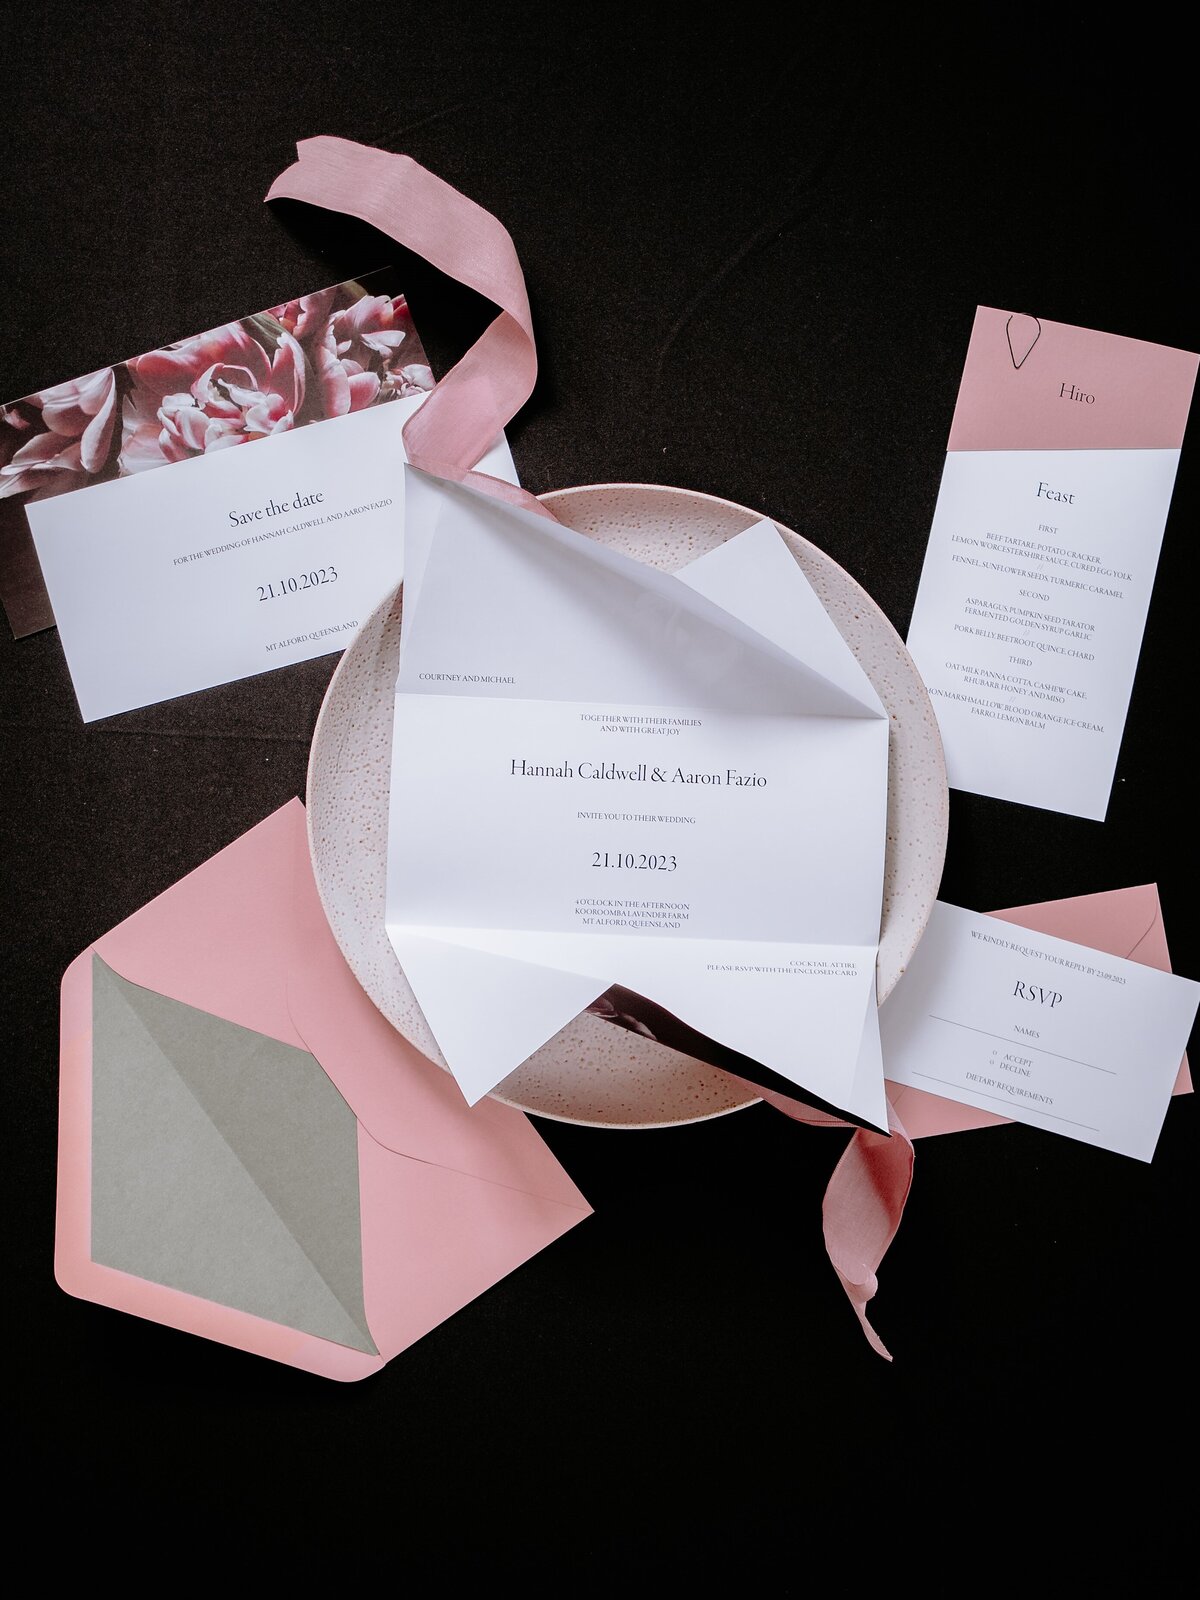 Unfolded origami wedding invitation with minimalist design